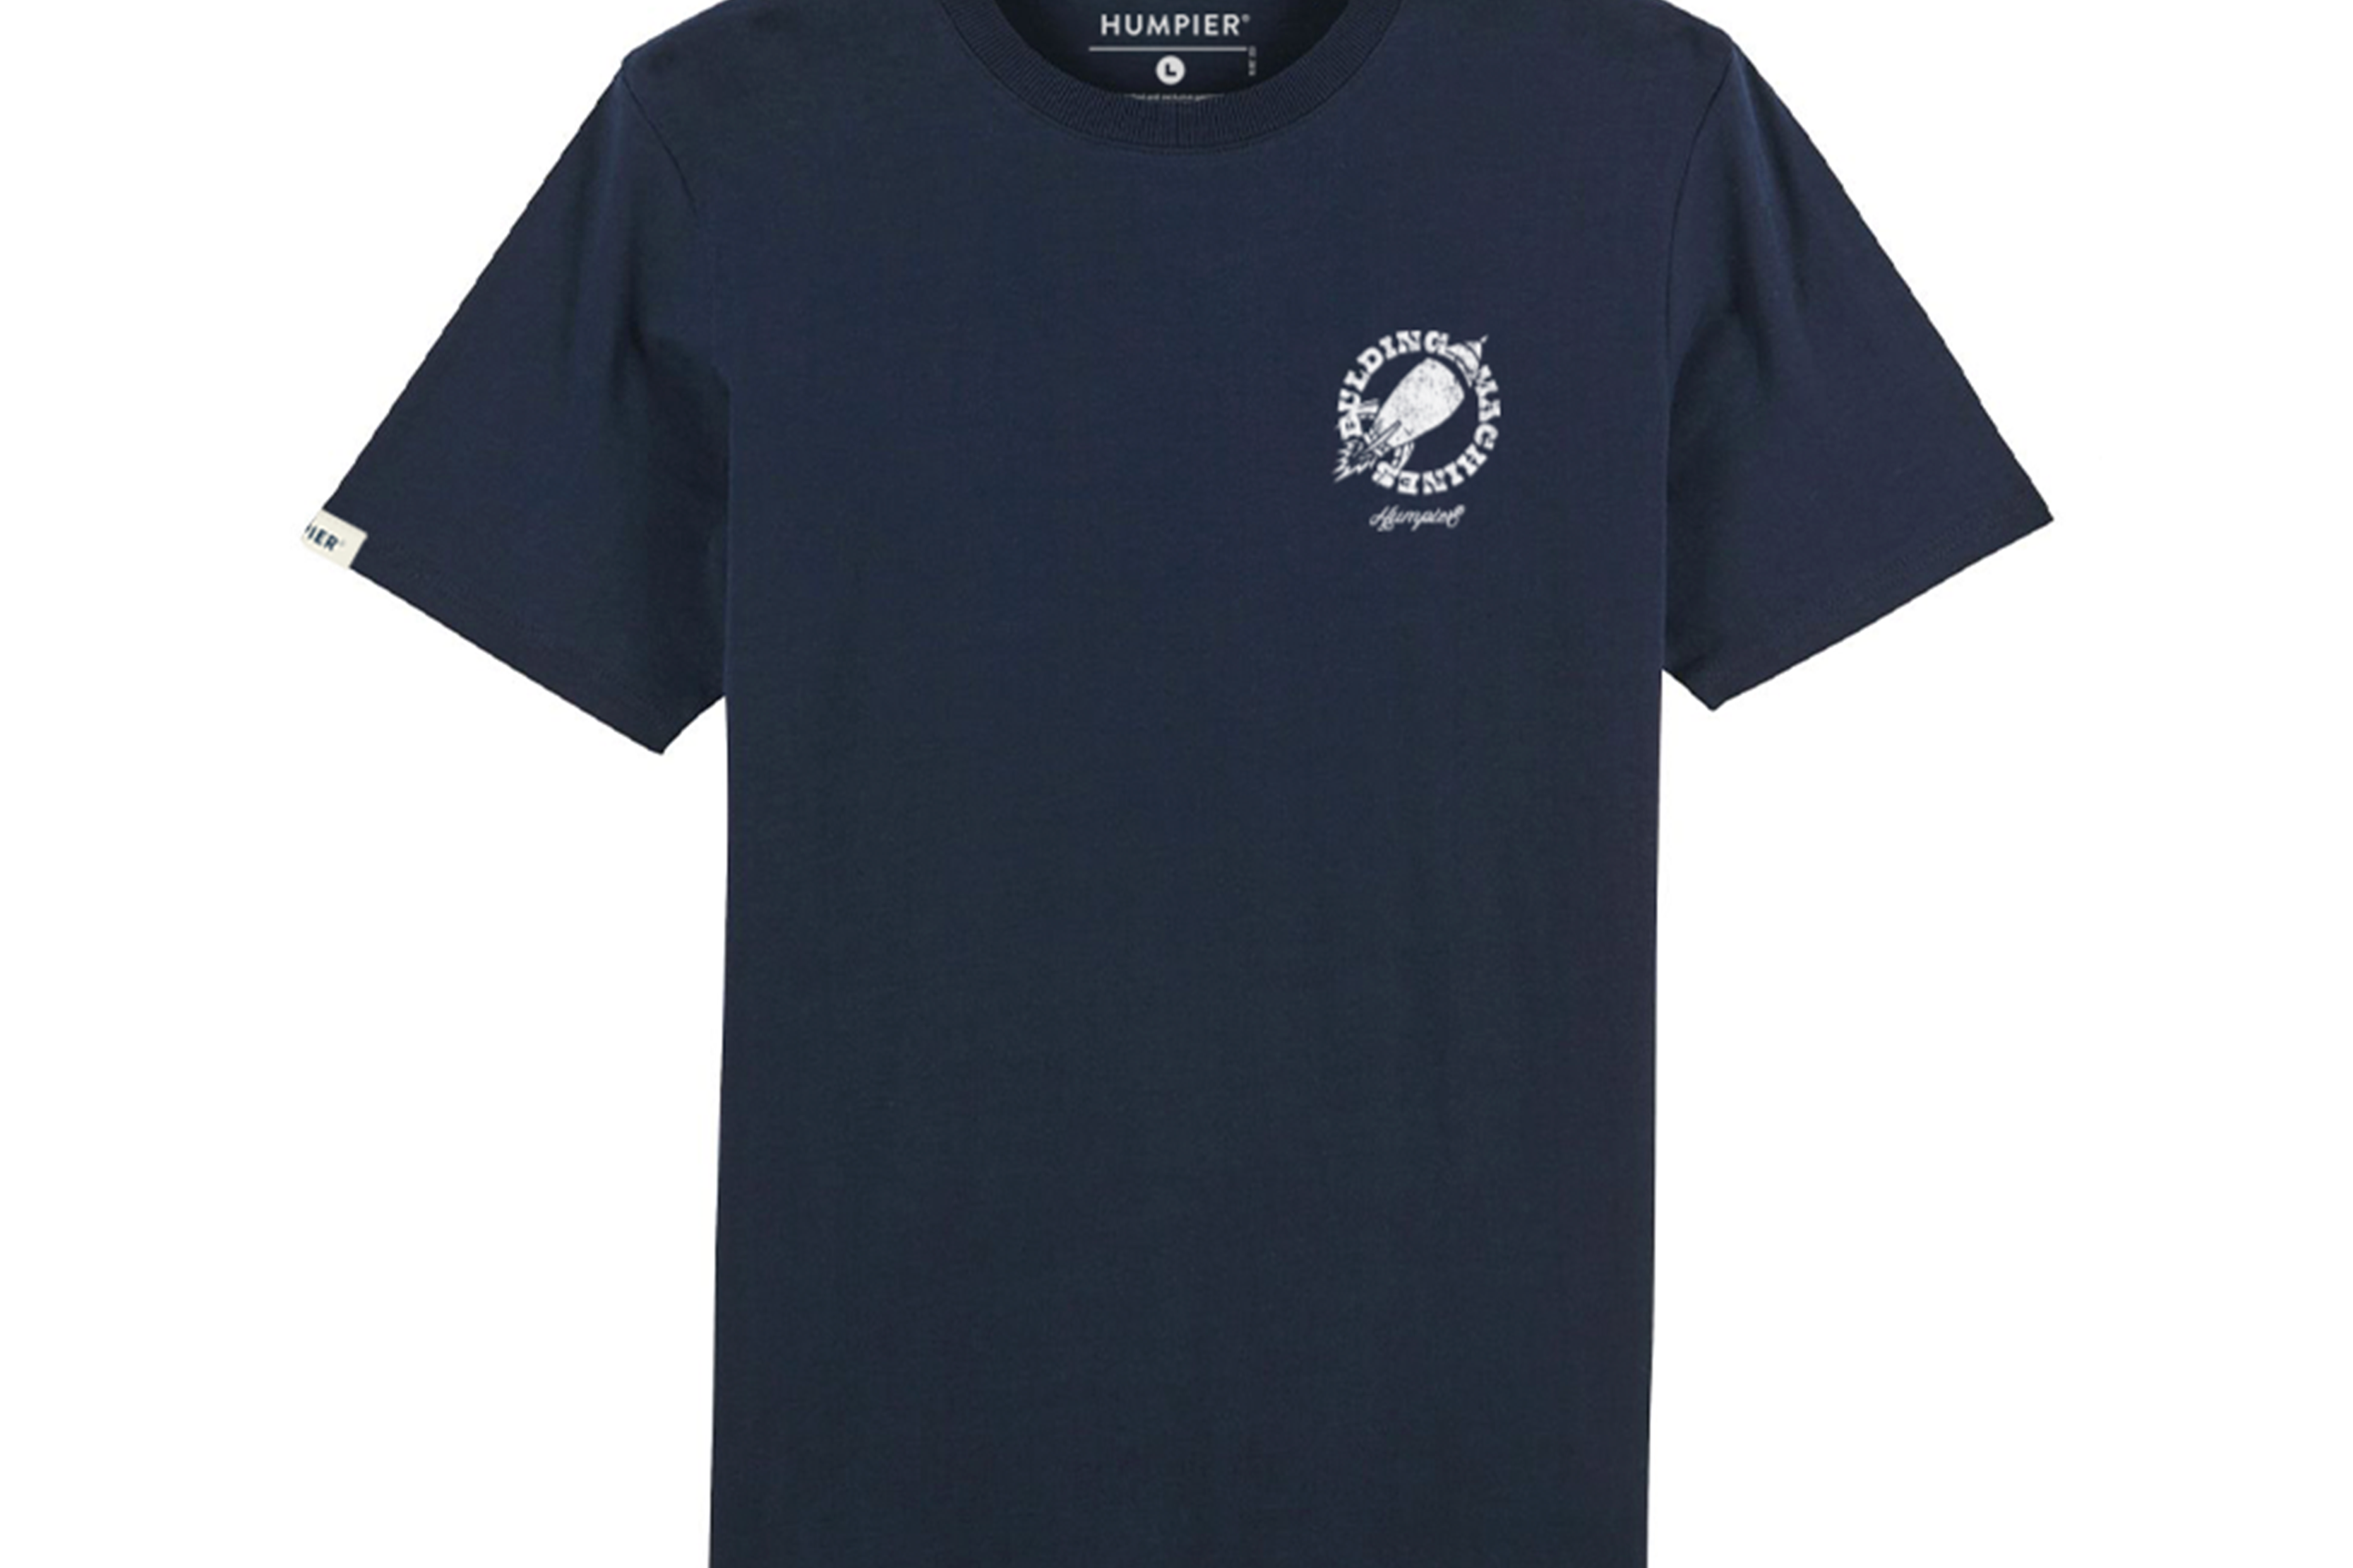 Camiseta manga corta Rocket Humpier azul